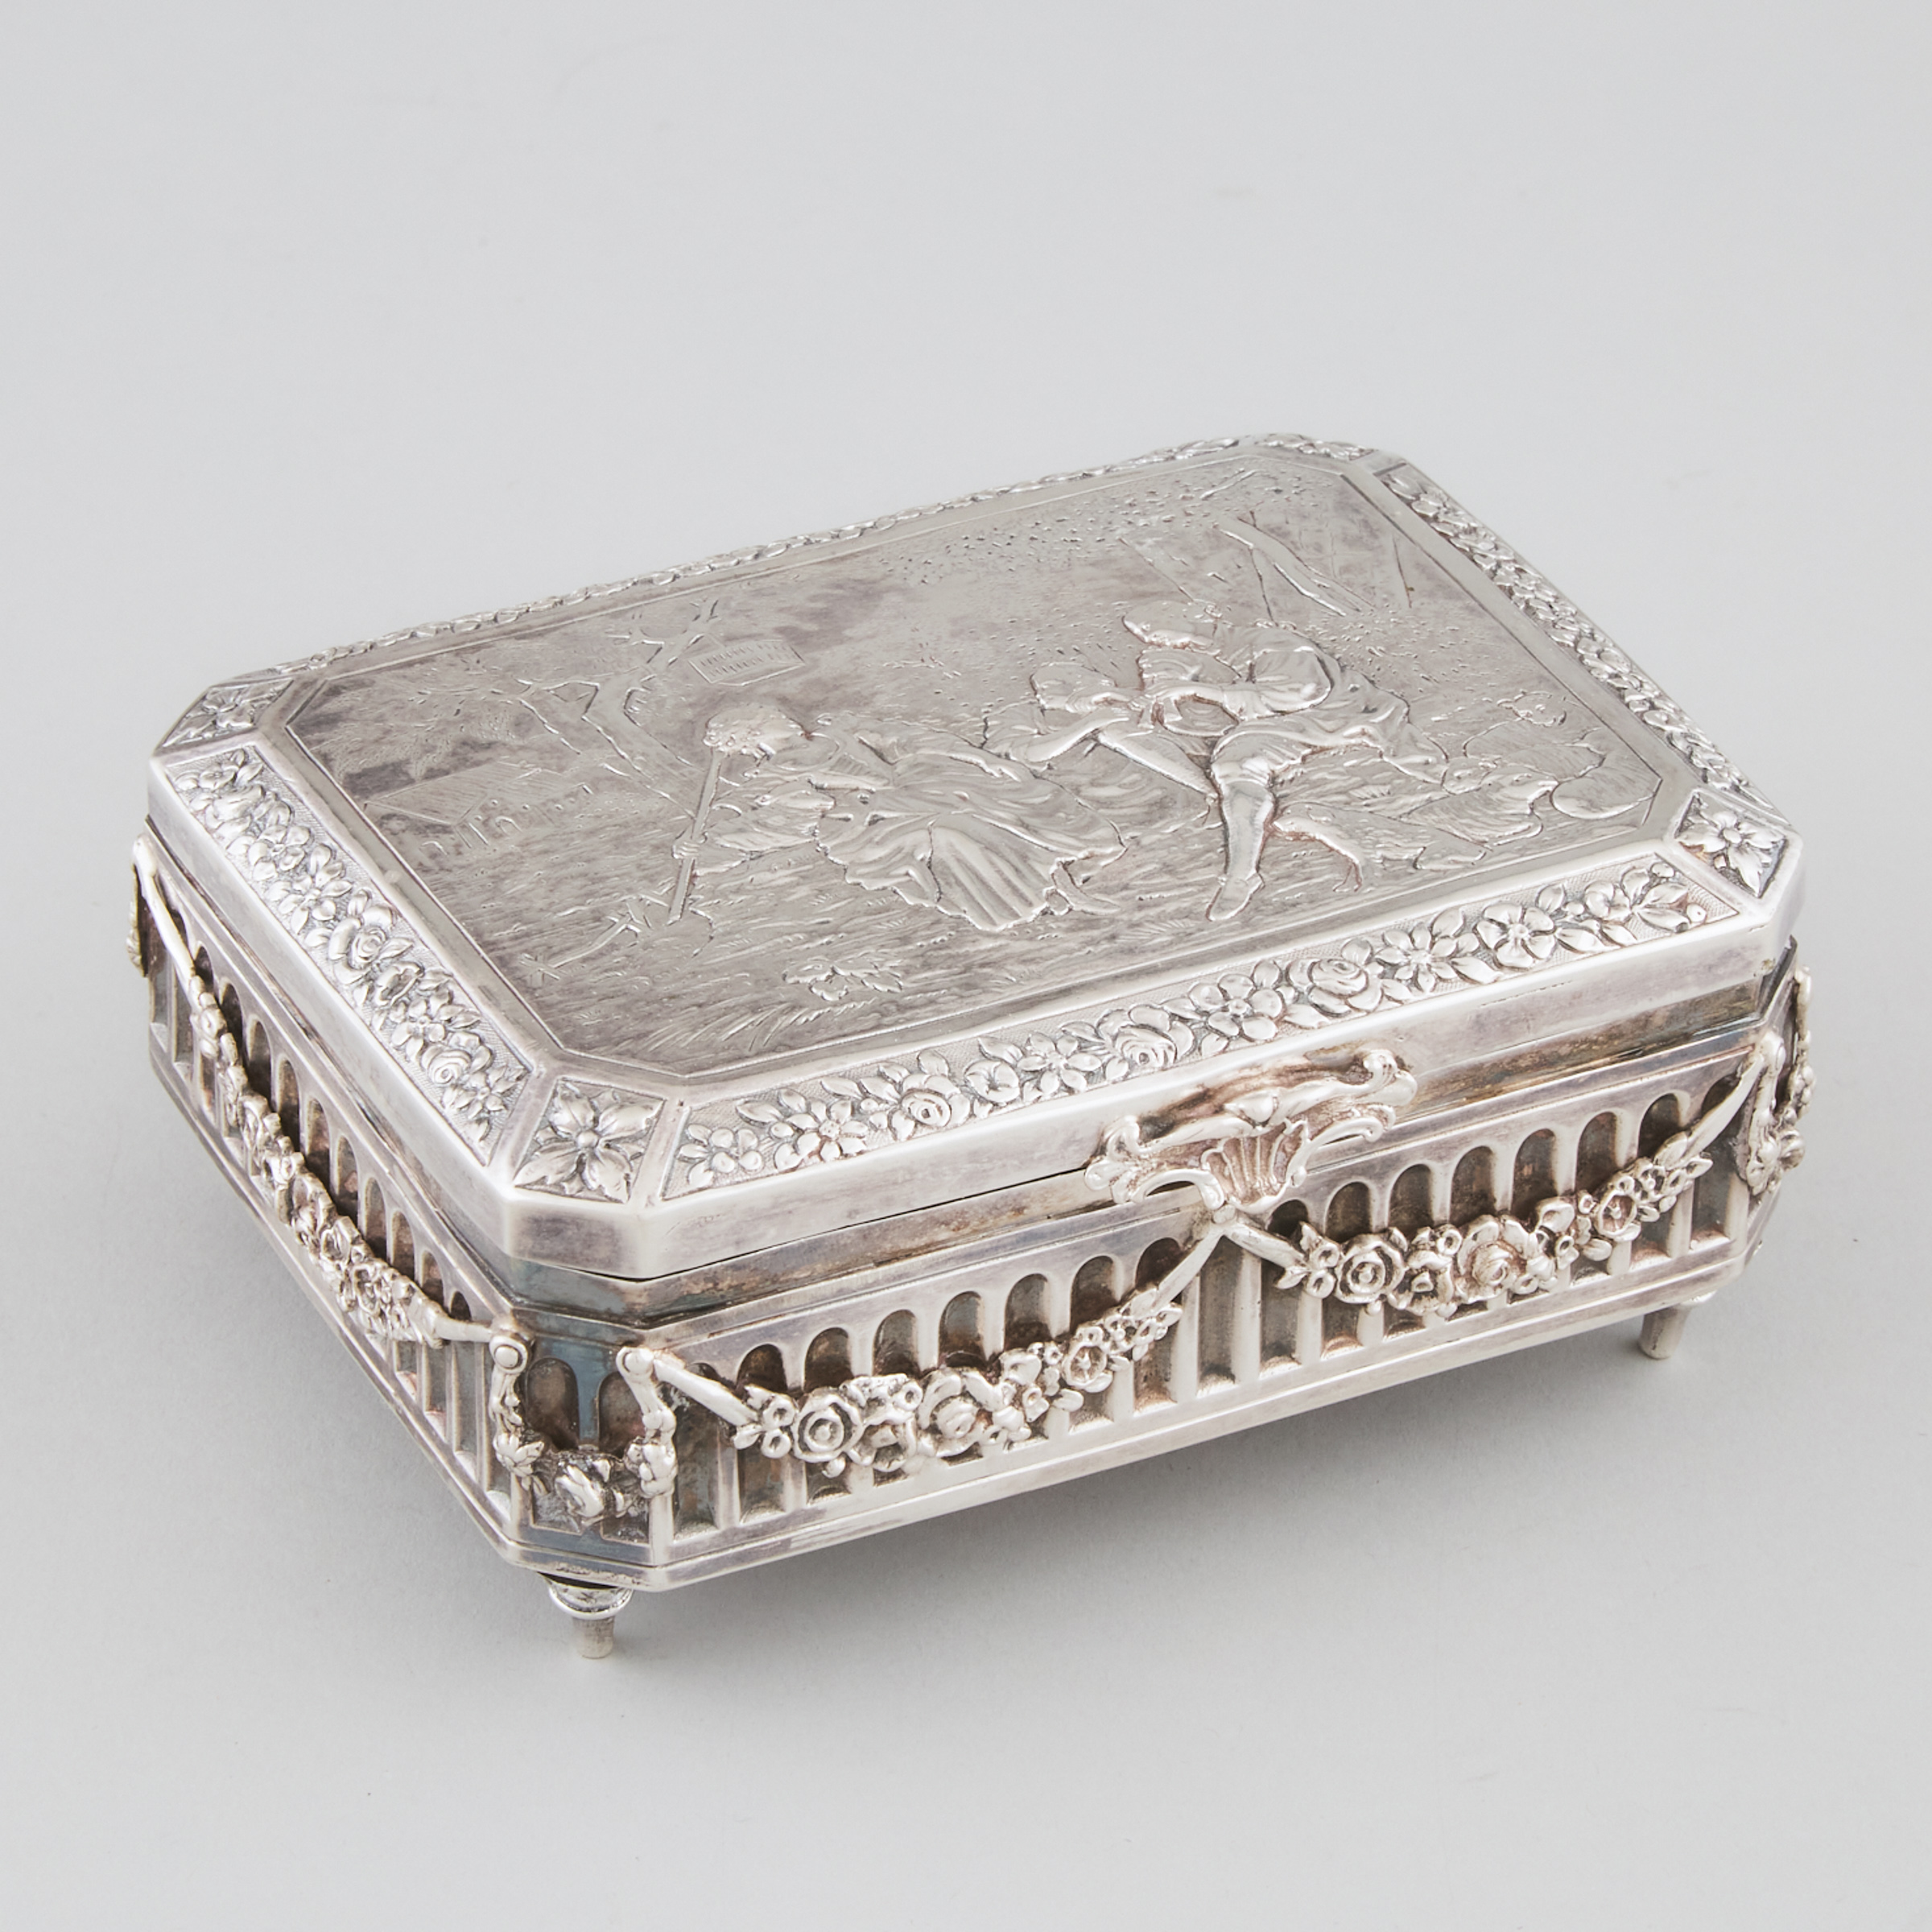 German Silver Rectangular Box, Georg Roth & Co., Hanau, c.1900